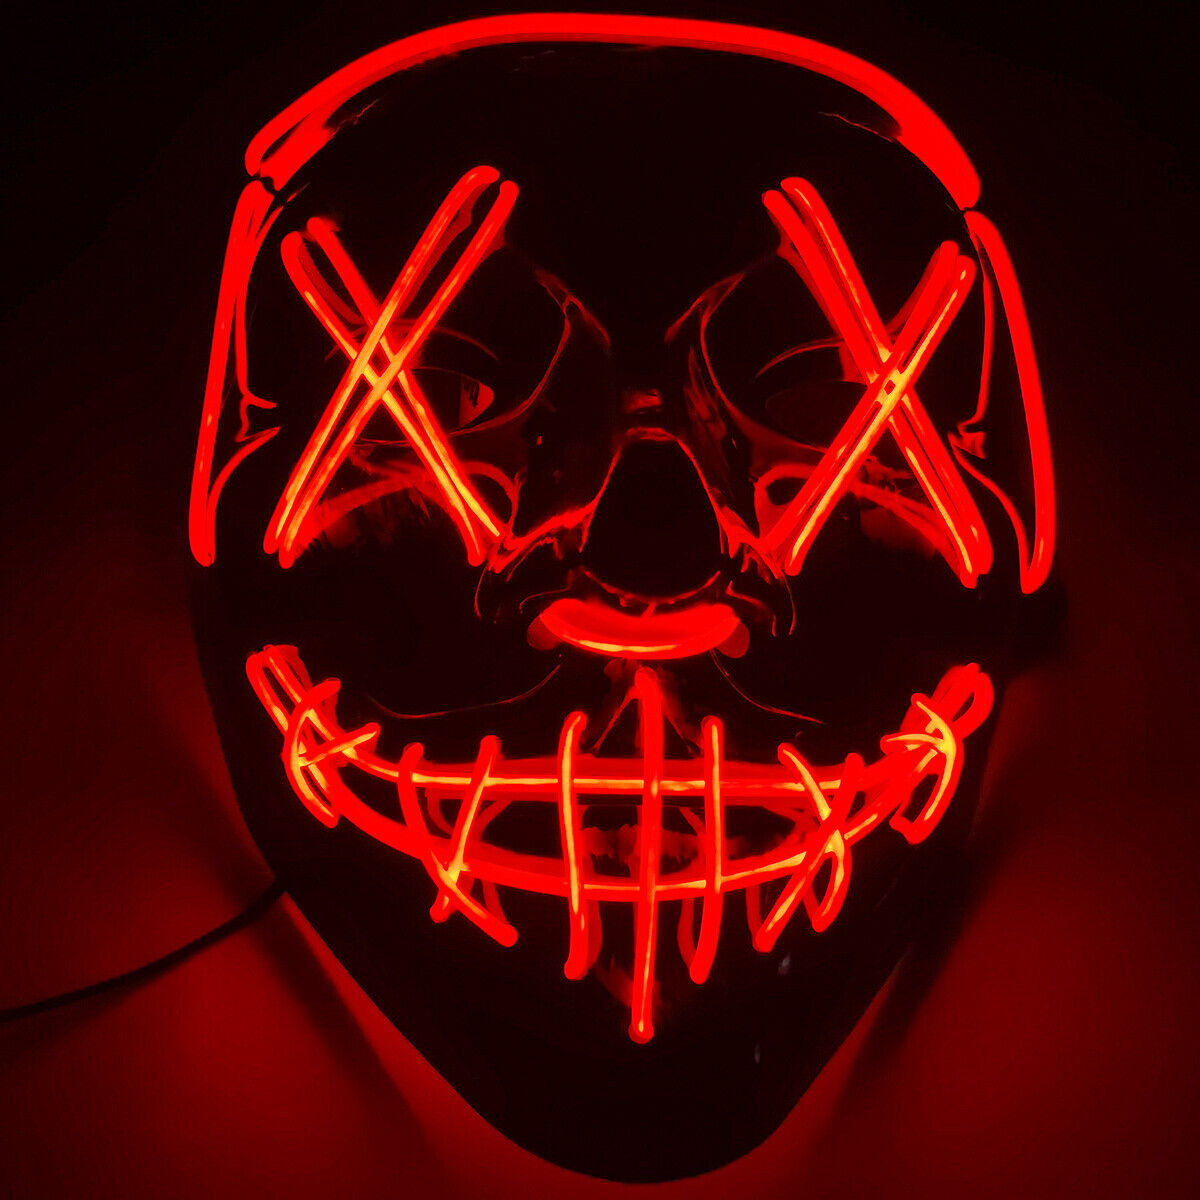 LED Luminous DJ Marshmello Helmet Mask Cosplay Halloween Costume Party Decor